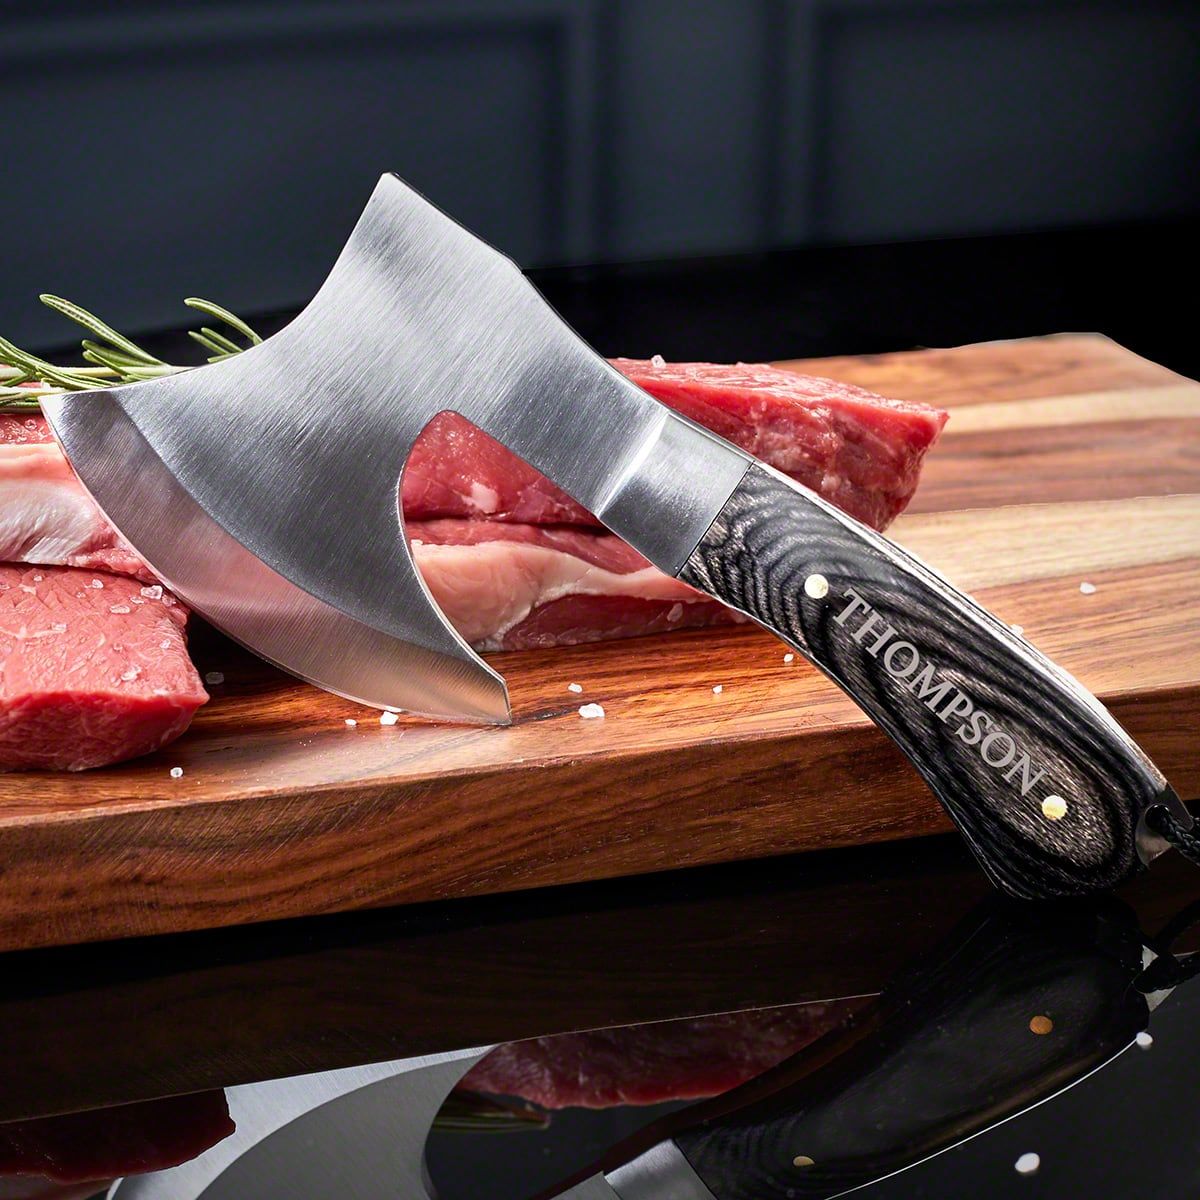 https://images.homewetbar.com/media/catalog/product/p/e/personalized-meat-cleaver-hatchet-ebody-wood-handle-singleline-p-10846.jpg?store=default&image-type=image